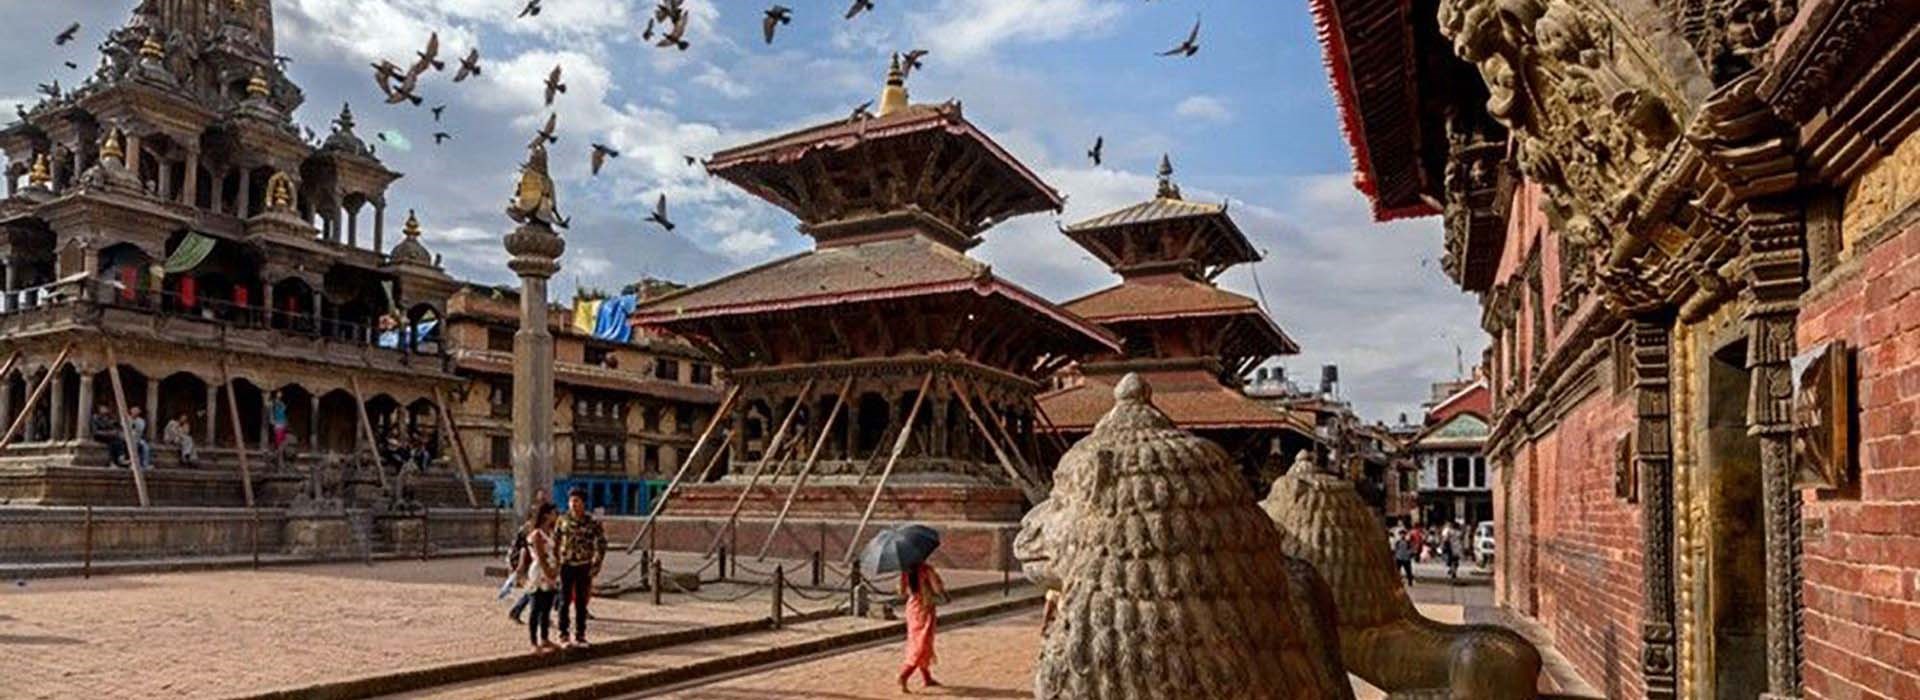 Visiter Patan - Népal